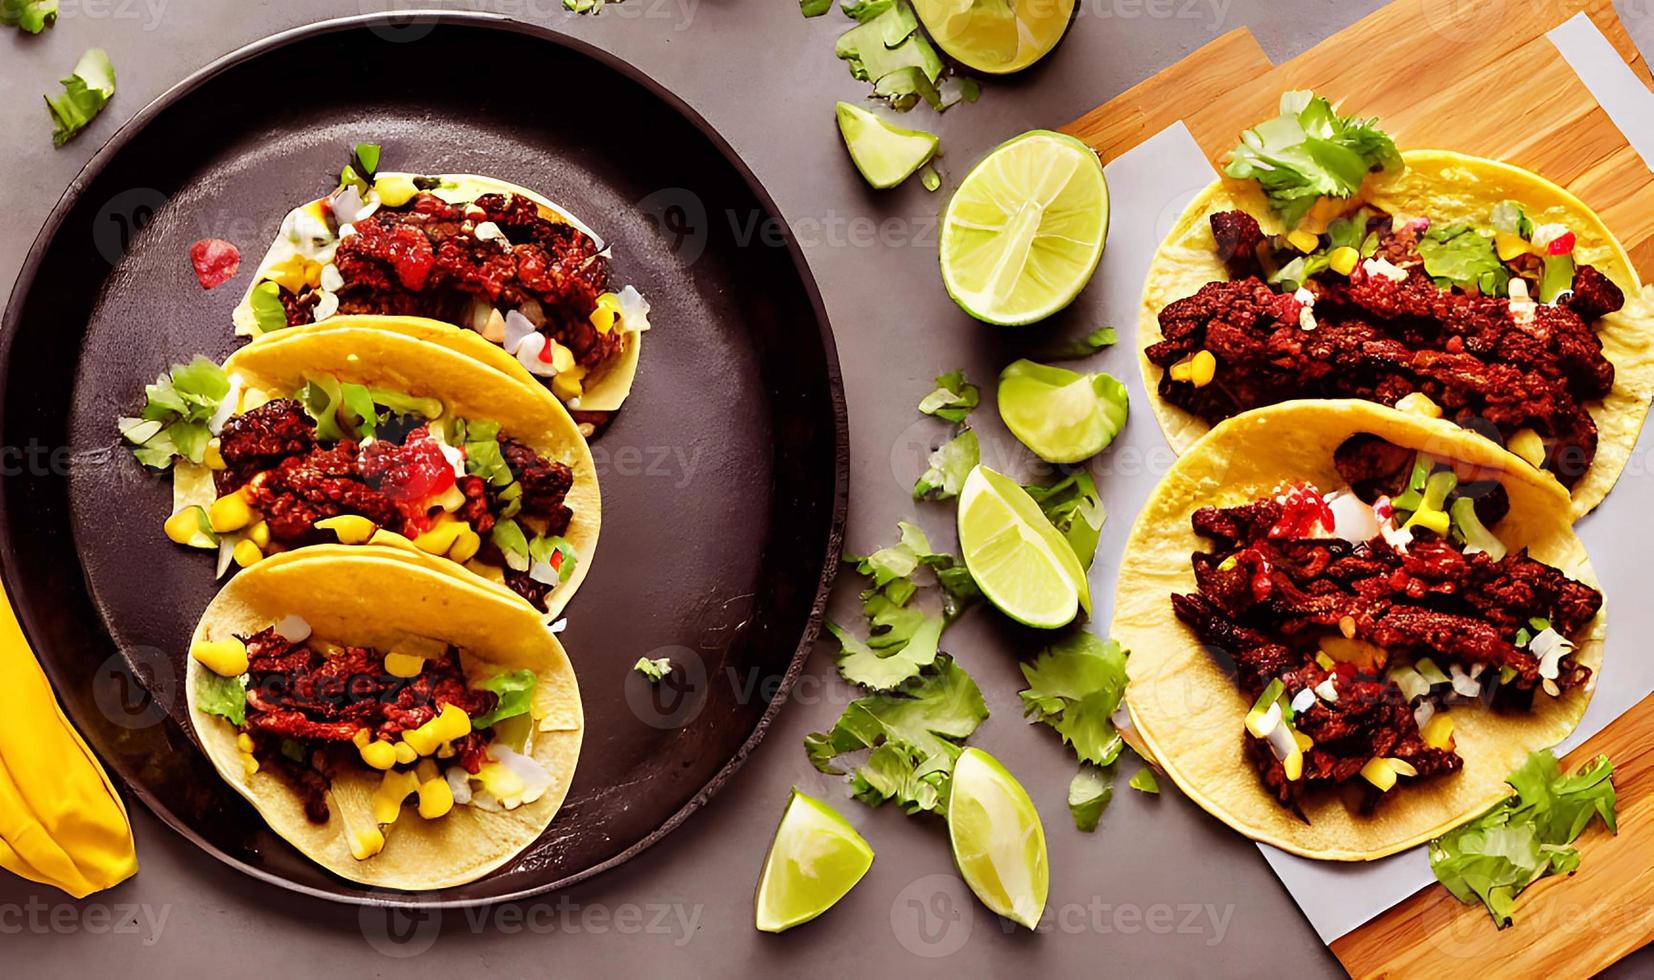 mexikanisches essen leckere tacos. foto